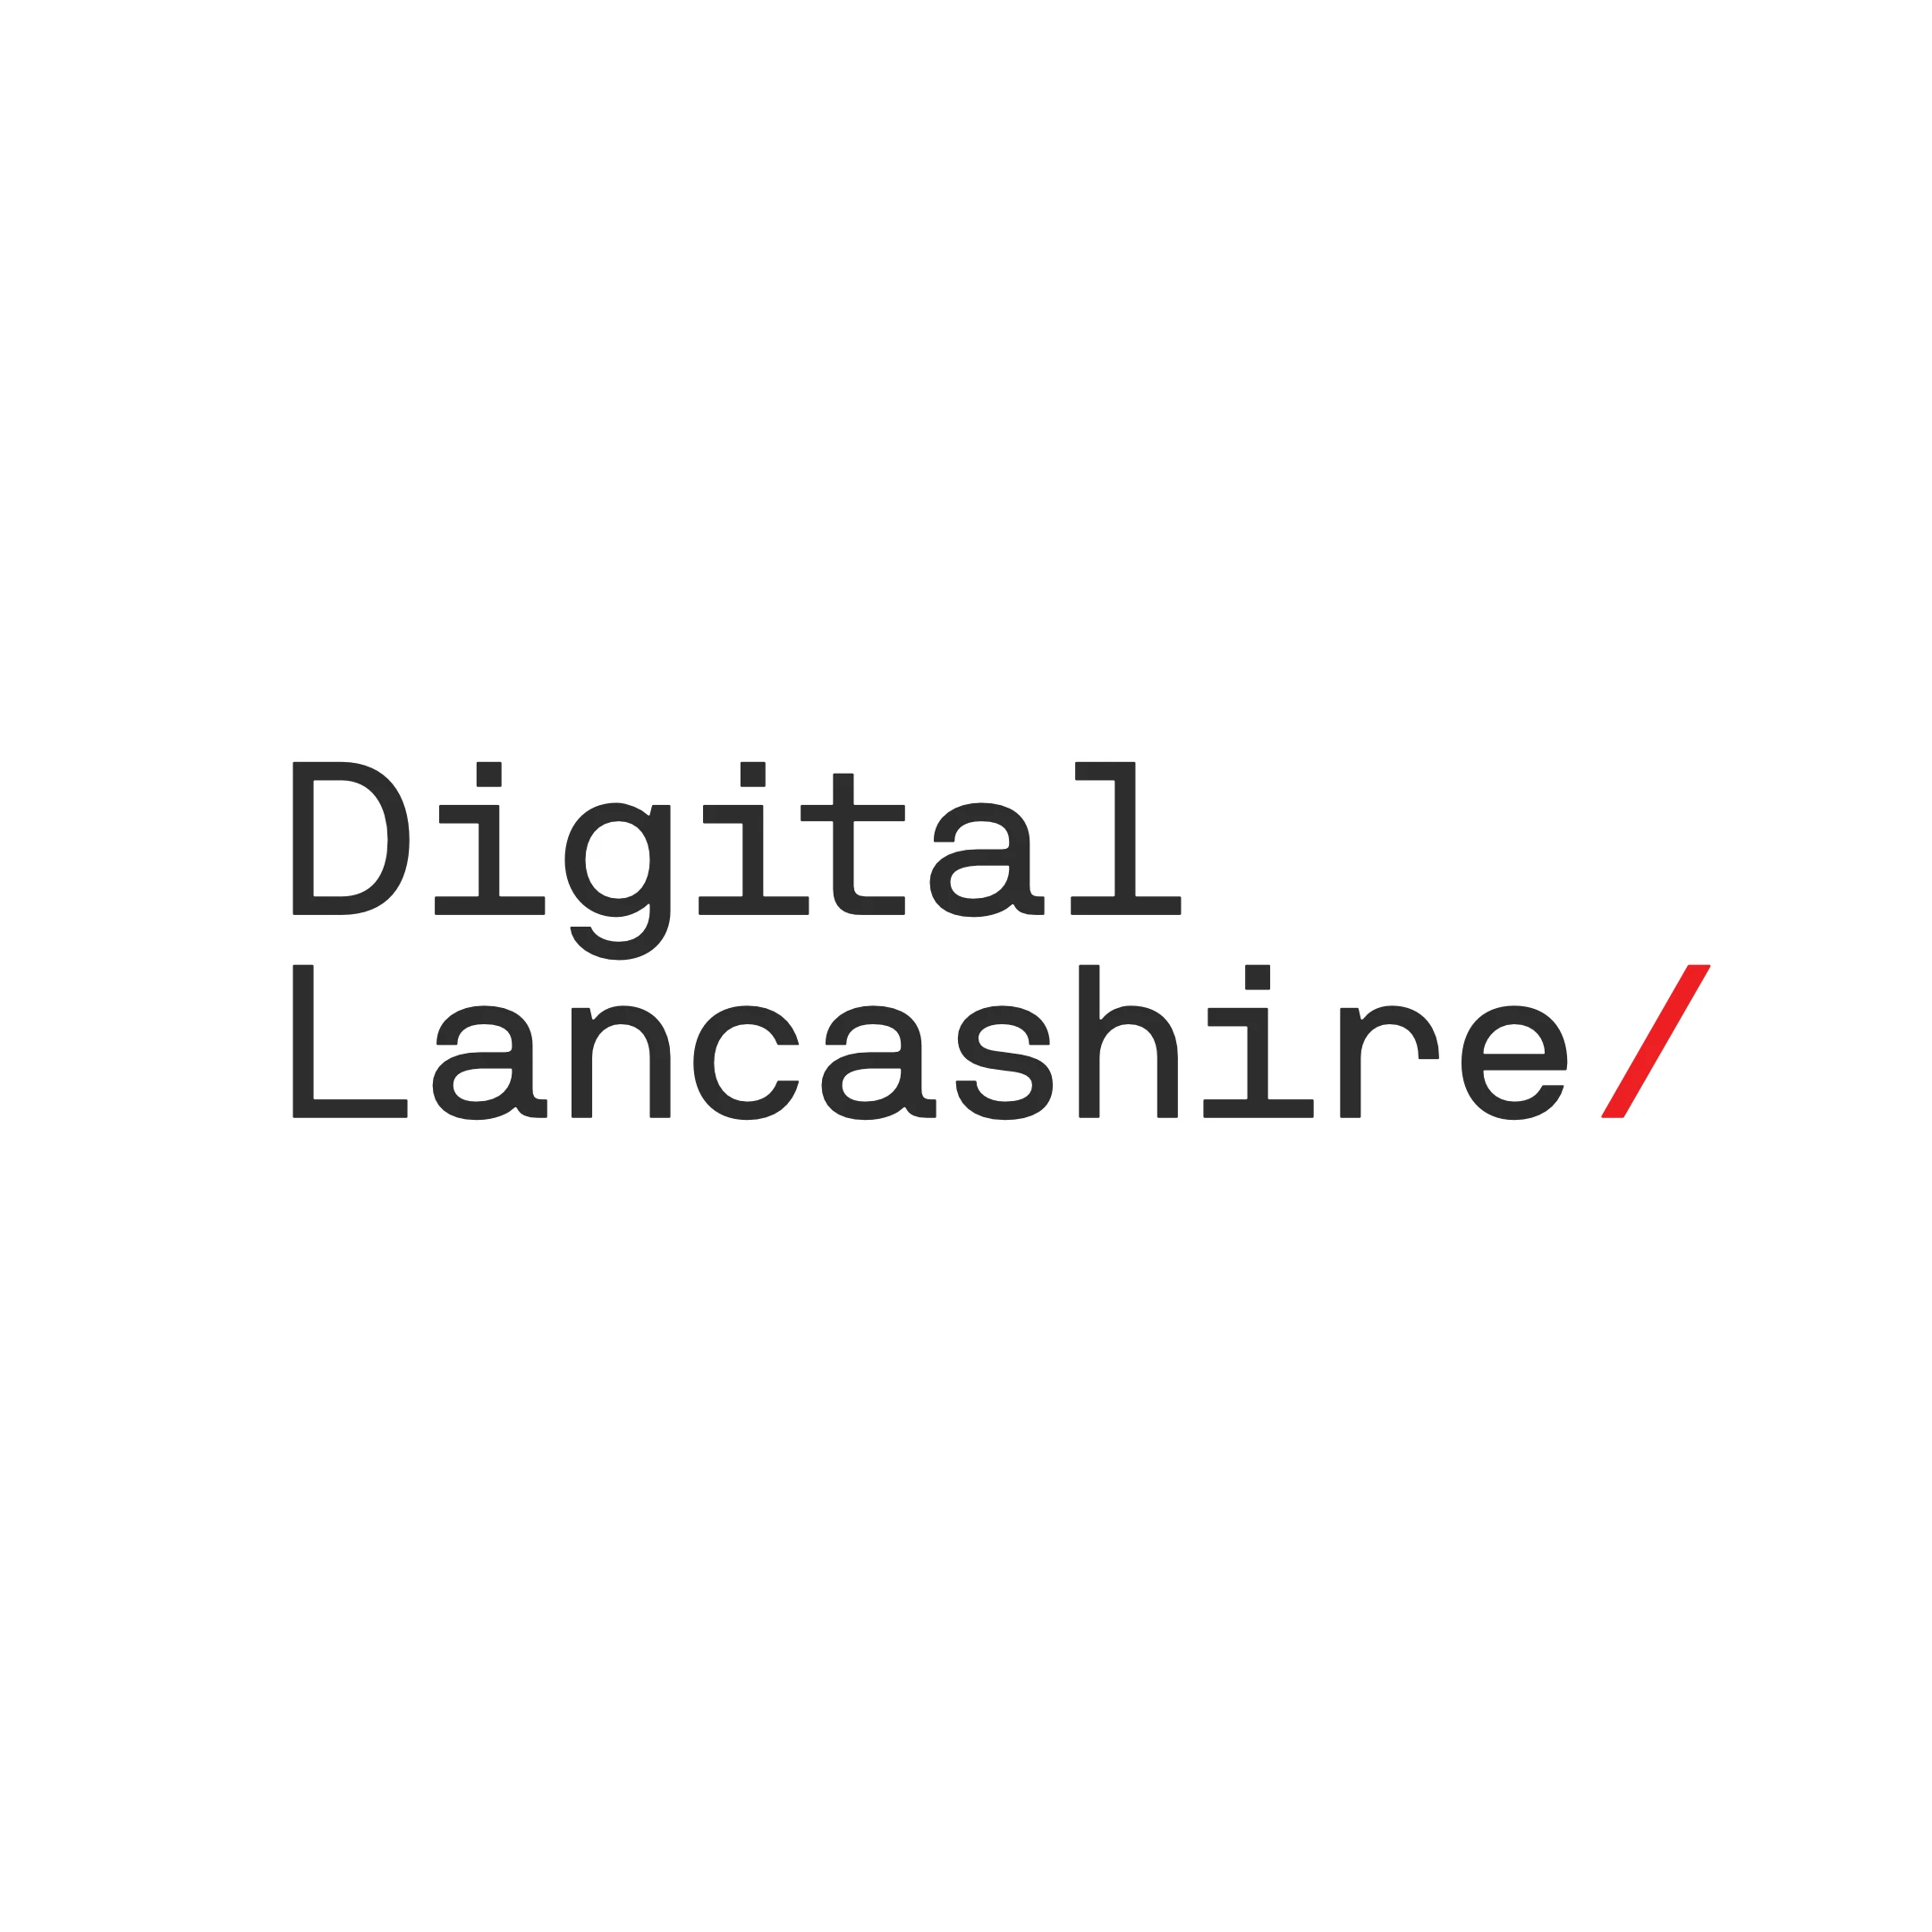 Digital Lancashire Logo